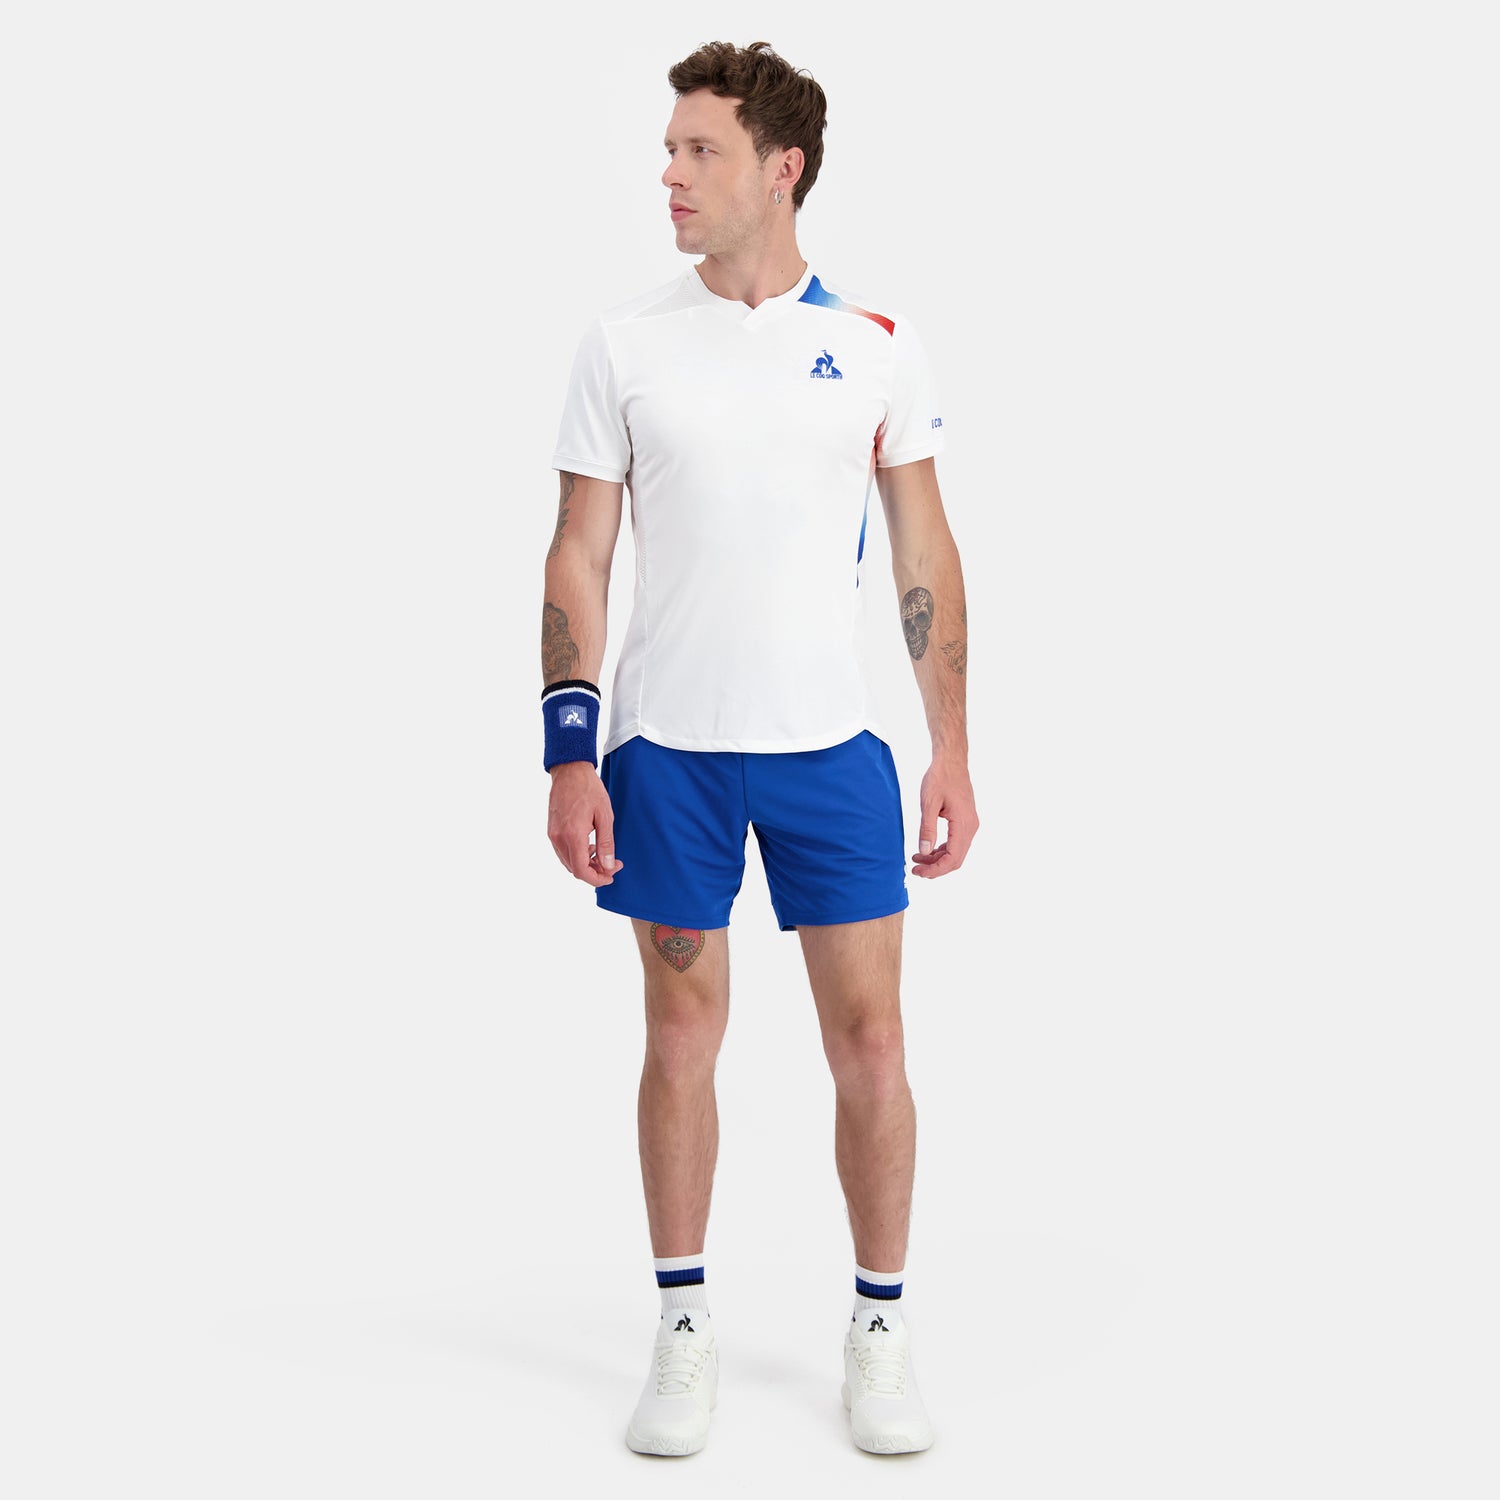 2410521-TENNIS PRO Short 24 N°1 M lapis blue  | Shorts for men